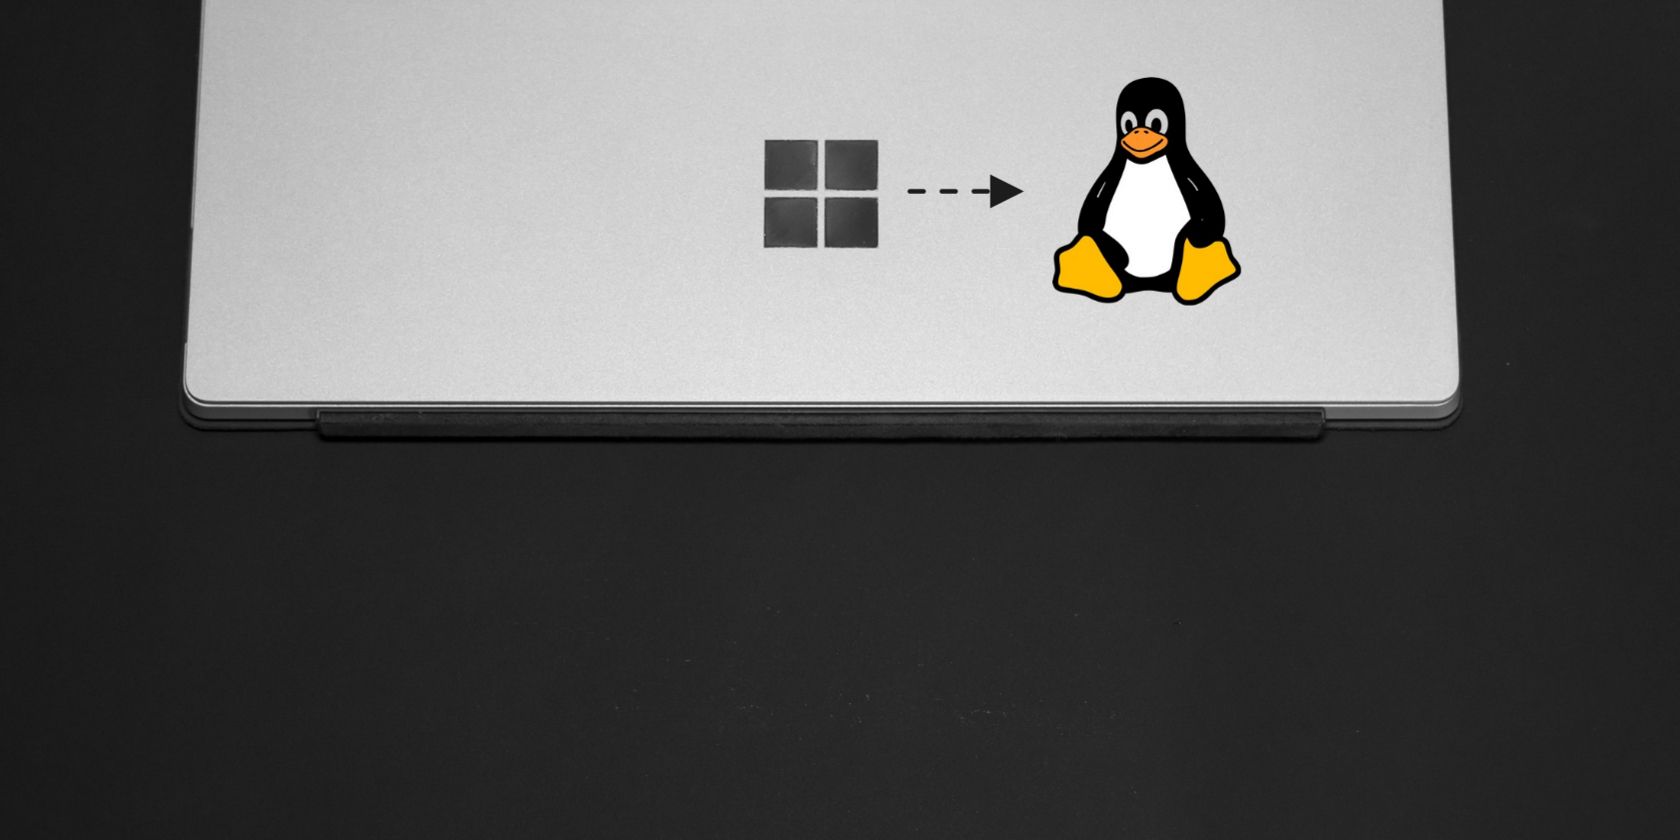 linux-easier-windows-laptop-featured